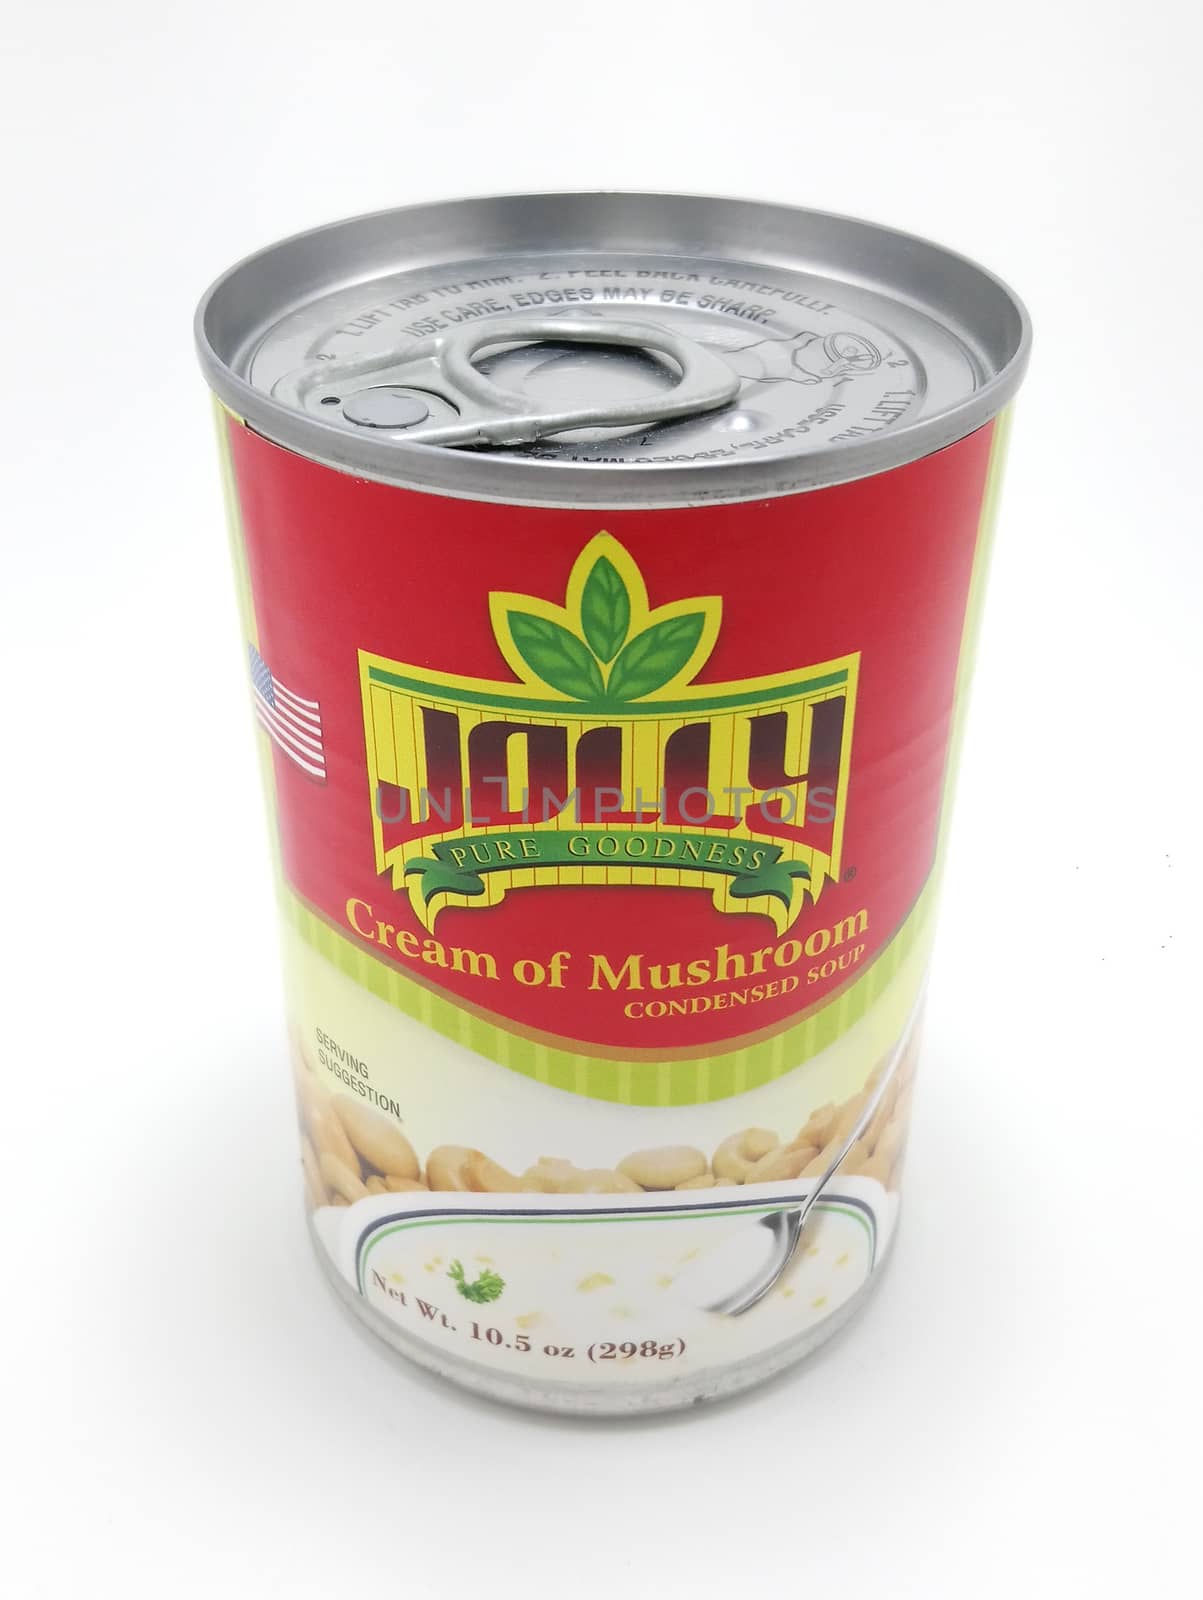 MANILA, PH - JUNE 23 - Jollly cream of mushroom condensed soup on June 23, 2020 in Manila, Philippines.